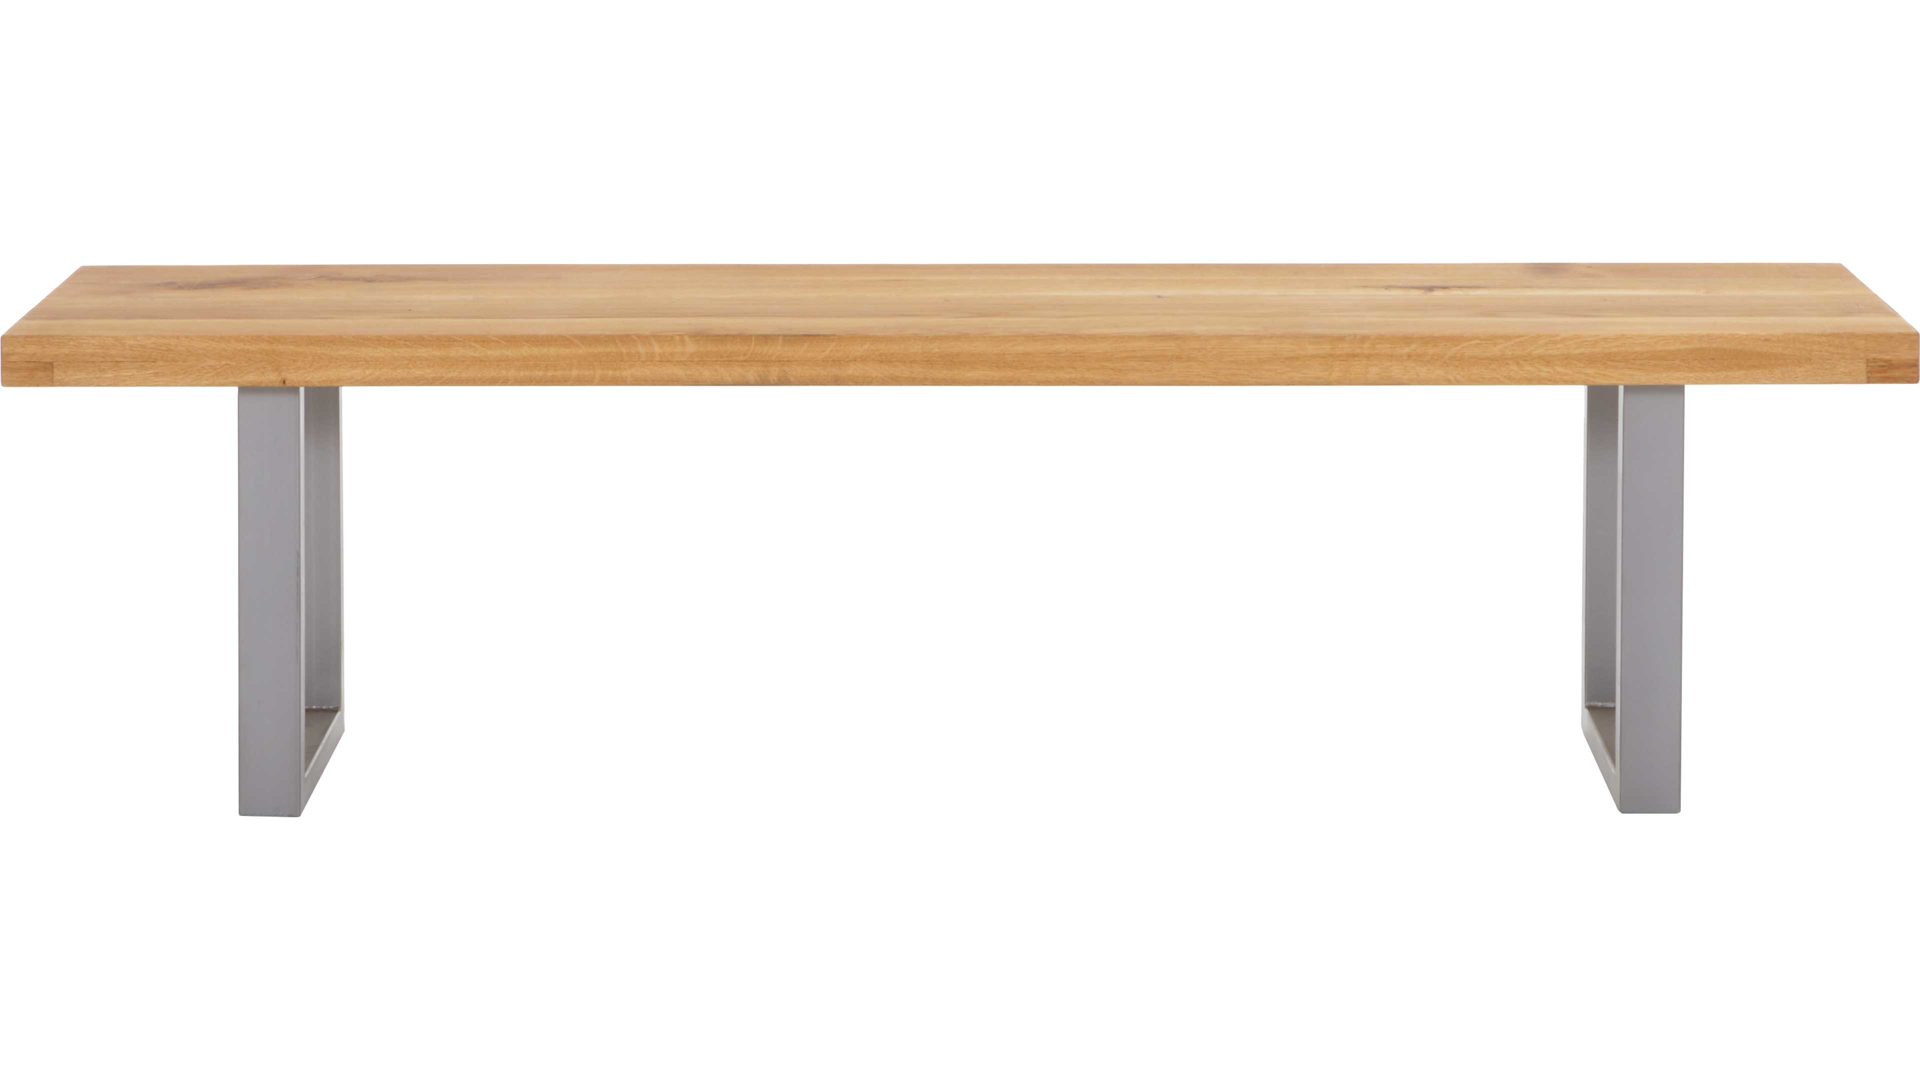 Holzbank Elfo-möbel aus Holz in Holzfarben Holzbank bzw. Sitzbank geölte Eiche & Stahl - Länge ca. 180 cm